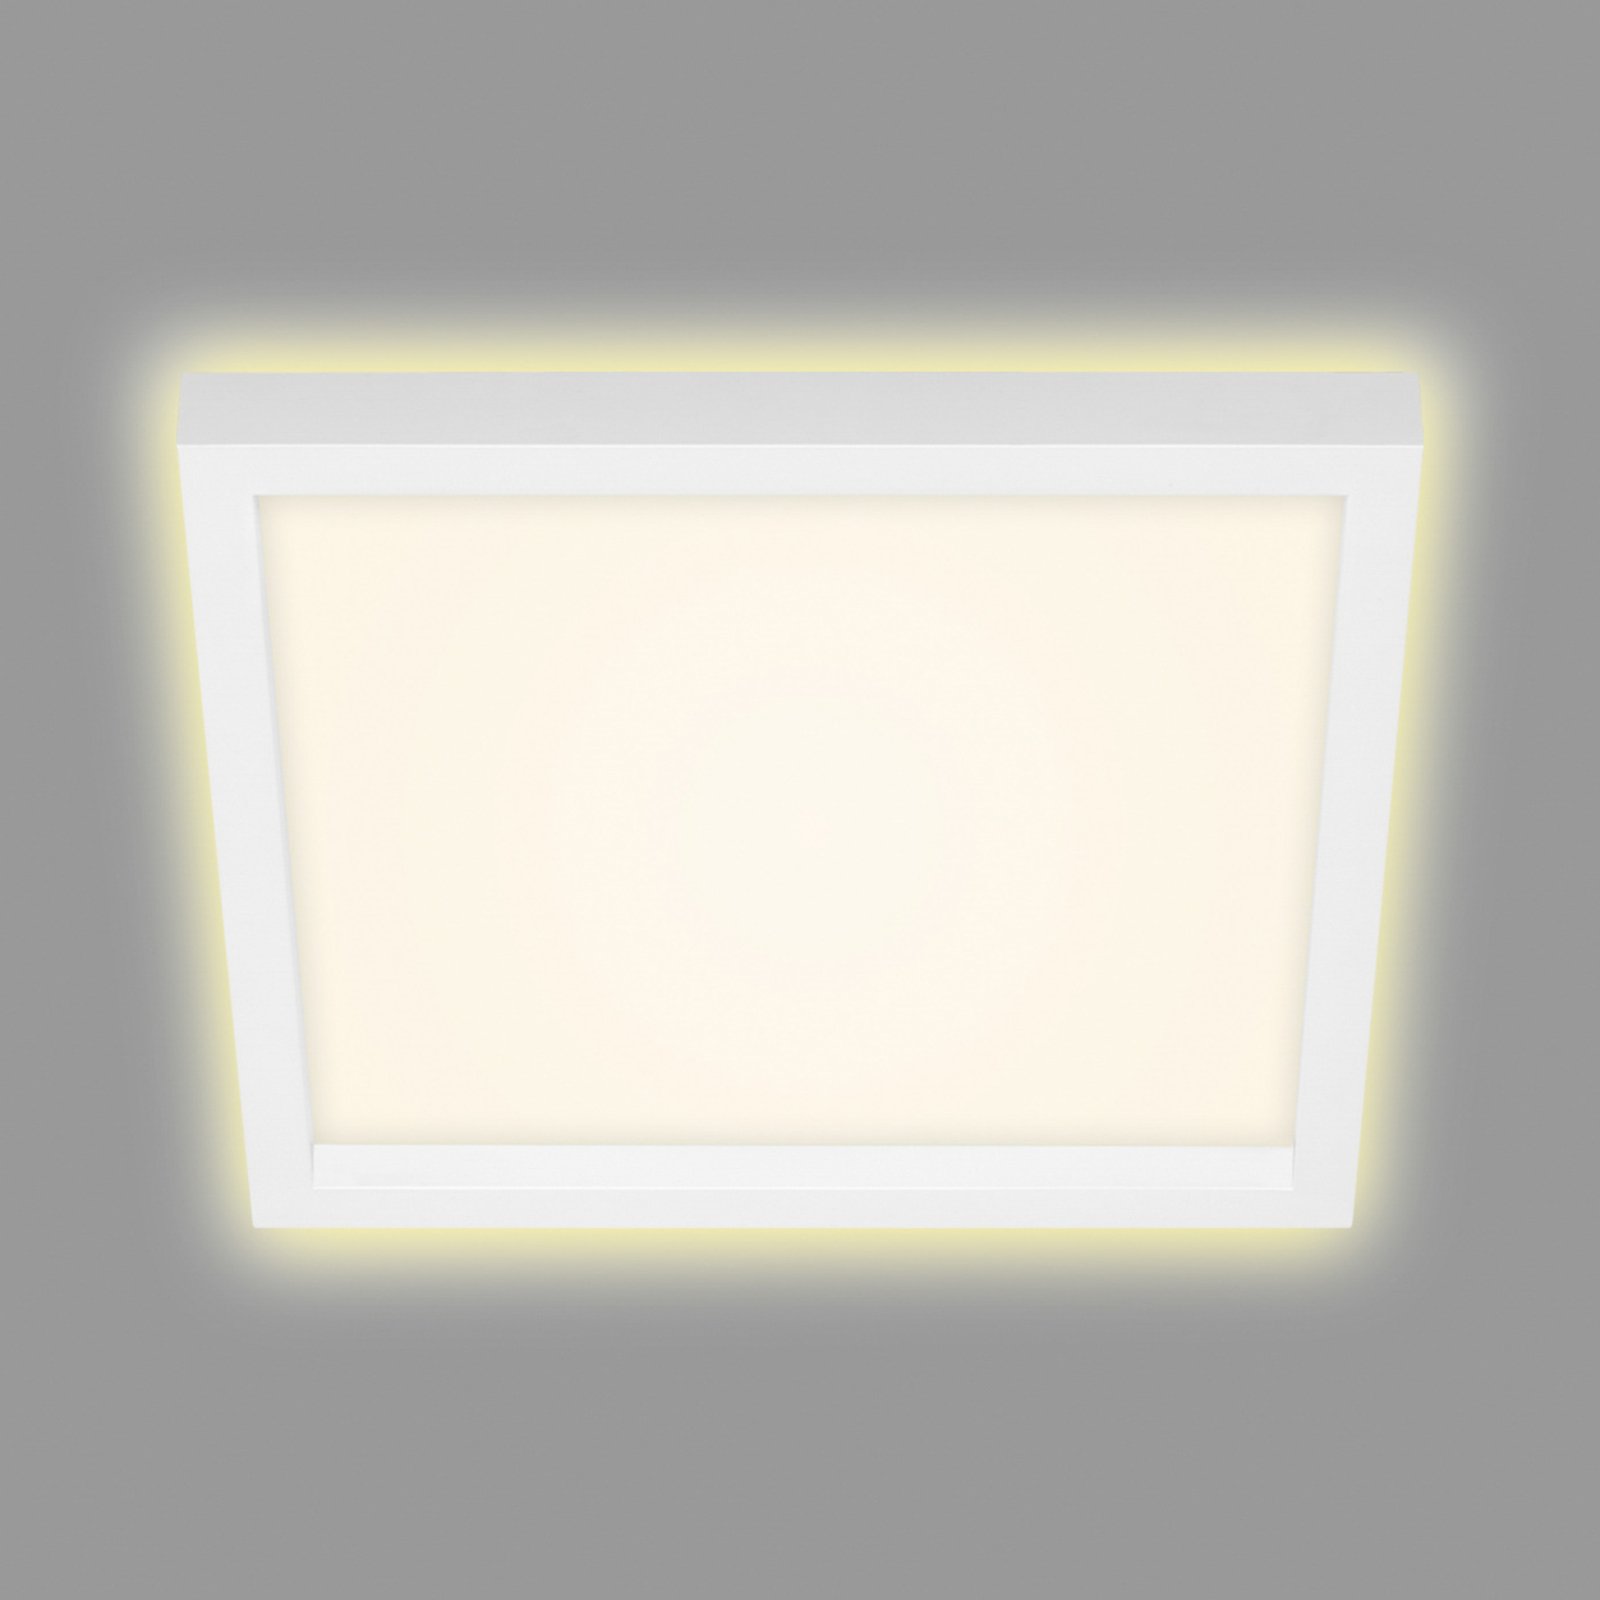 Stropné LED svietidlo 7362, 29 x 29 cm, biele